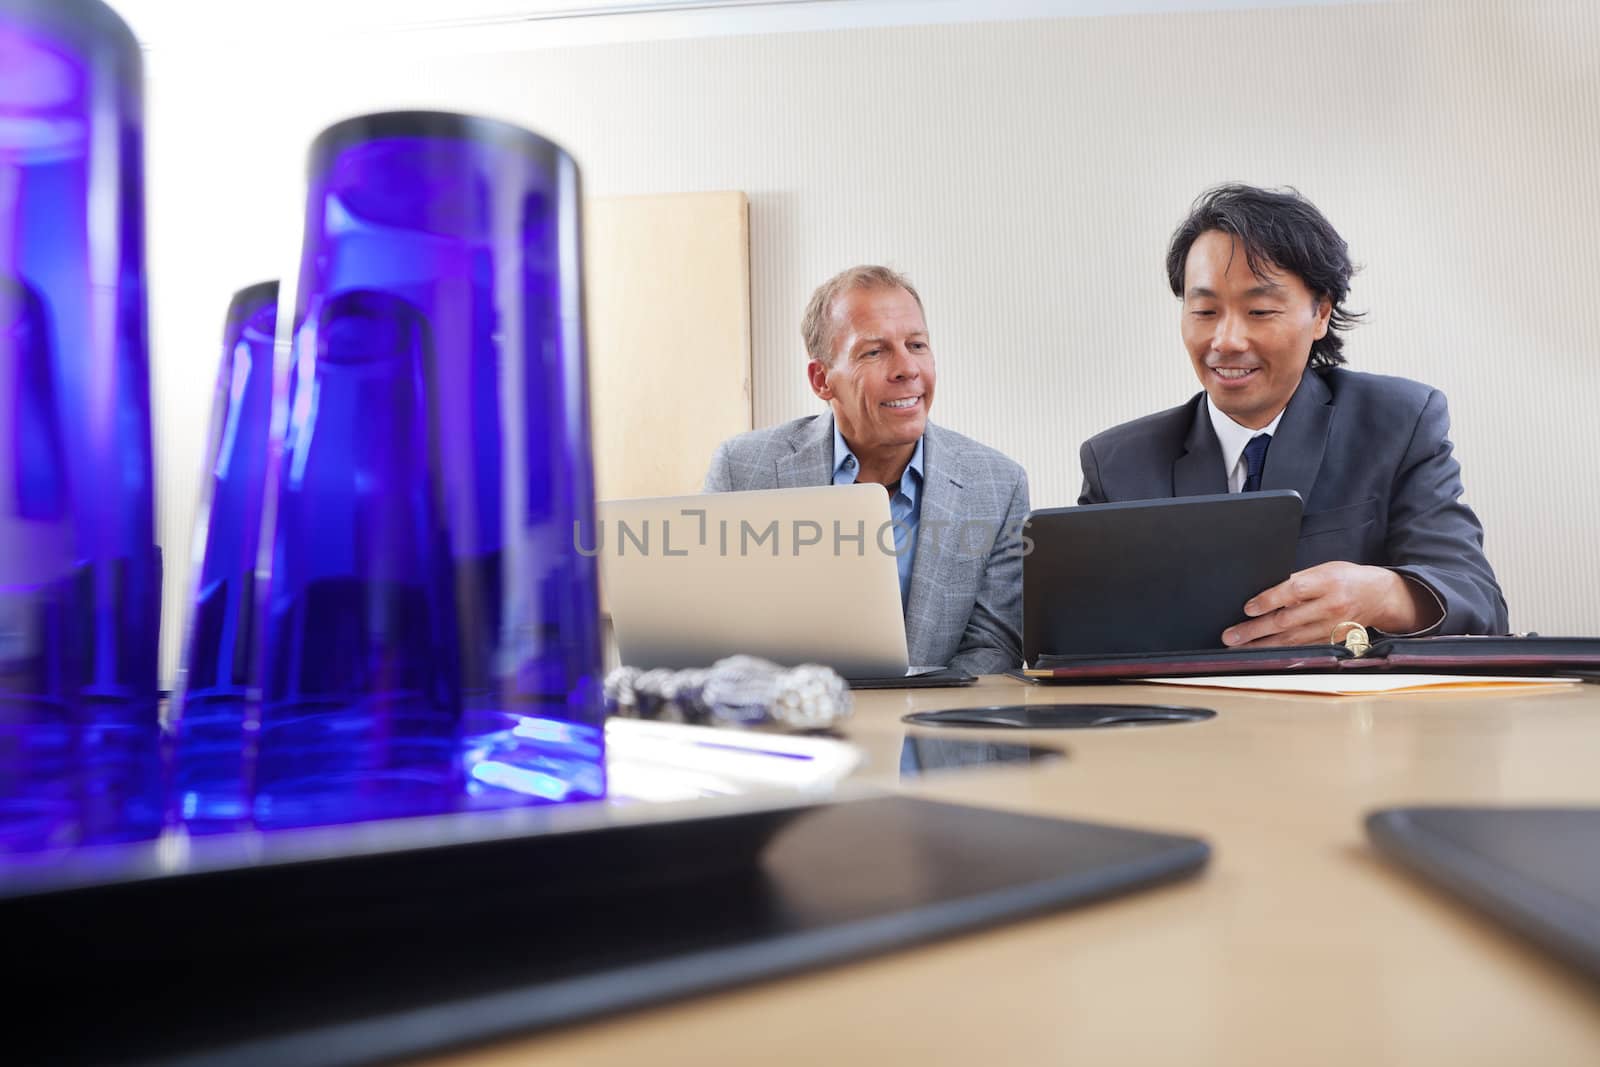 Two handsome businessmen working together on a laptop and digital tablet